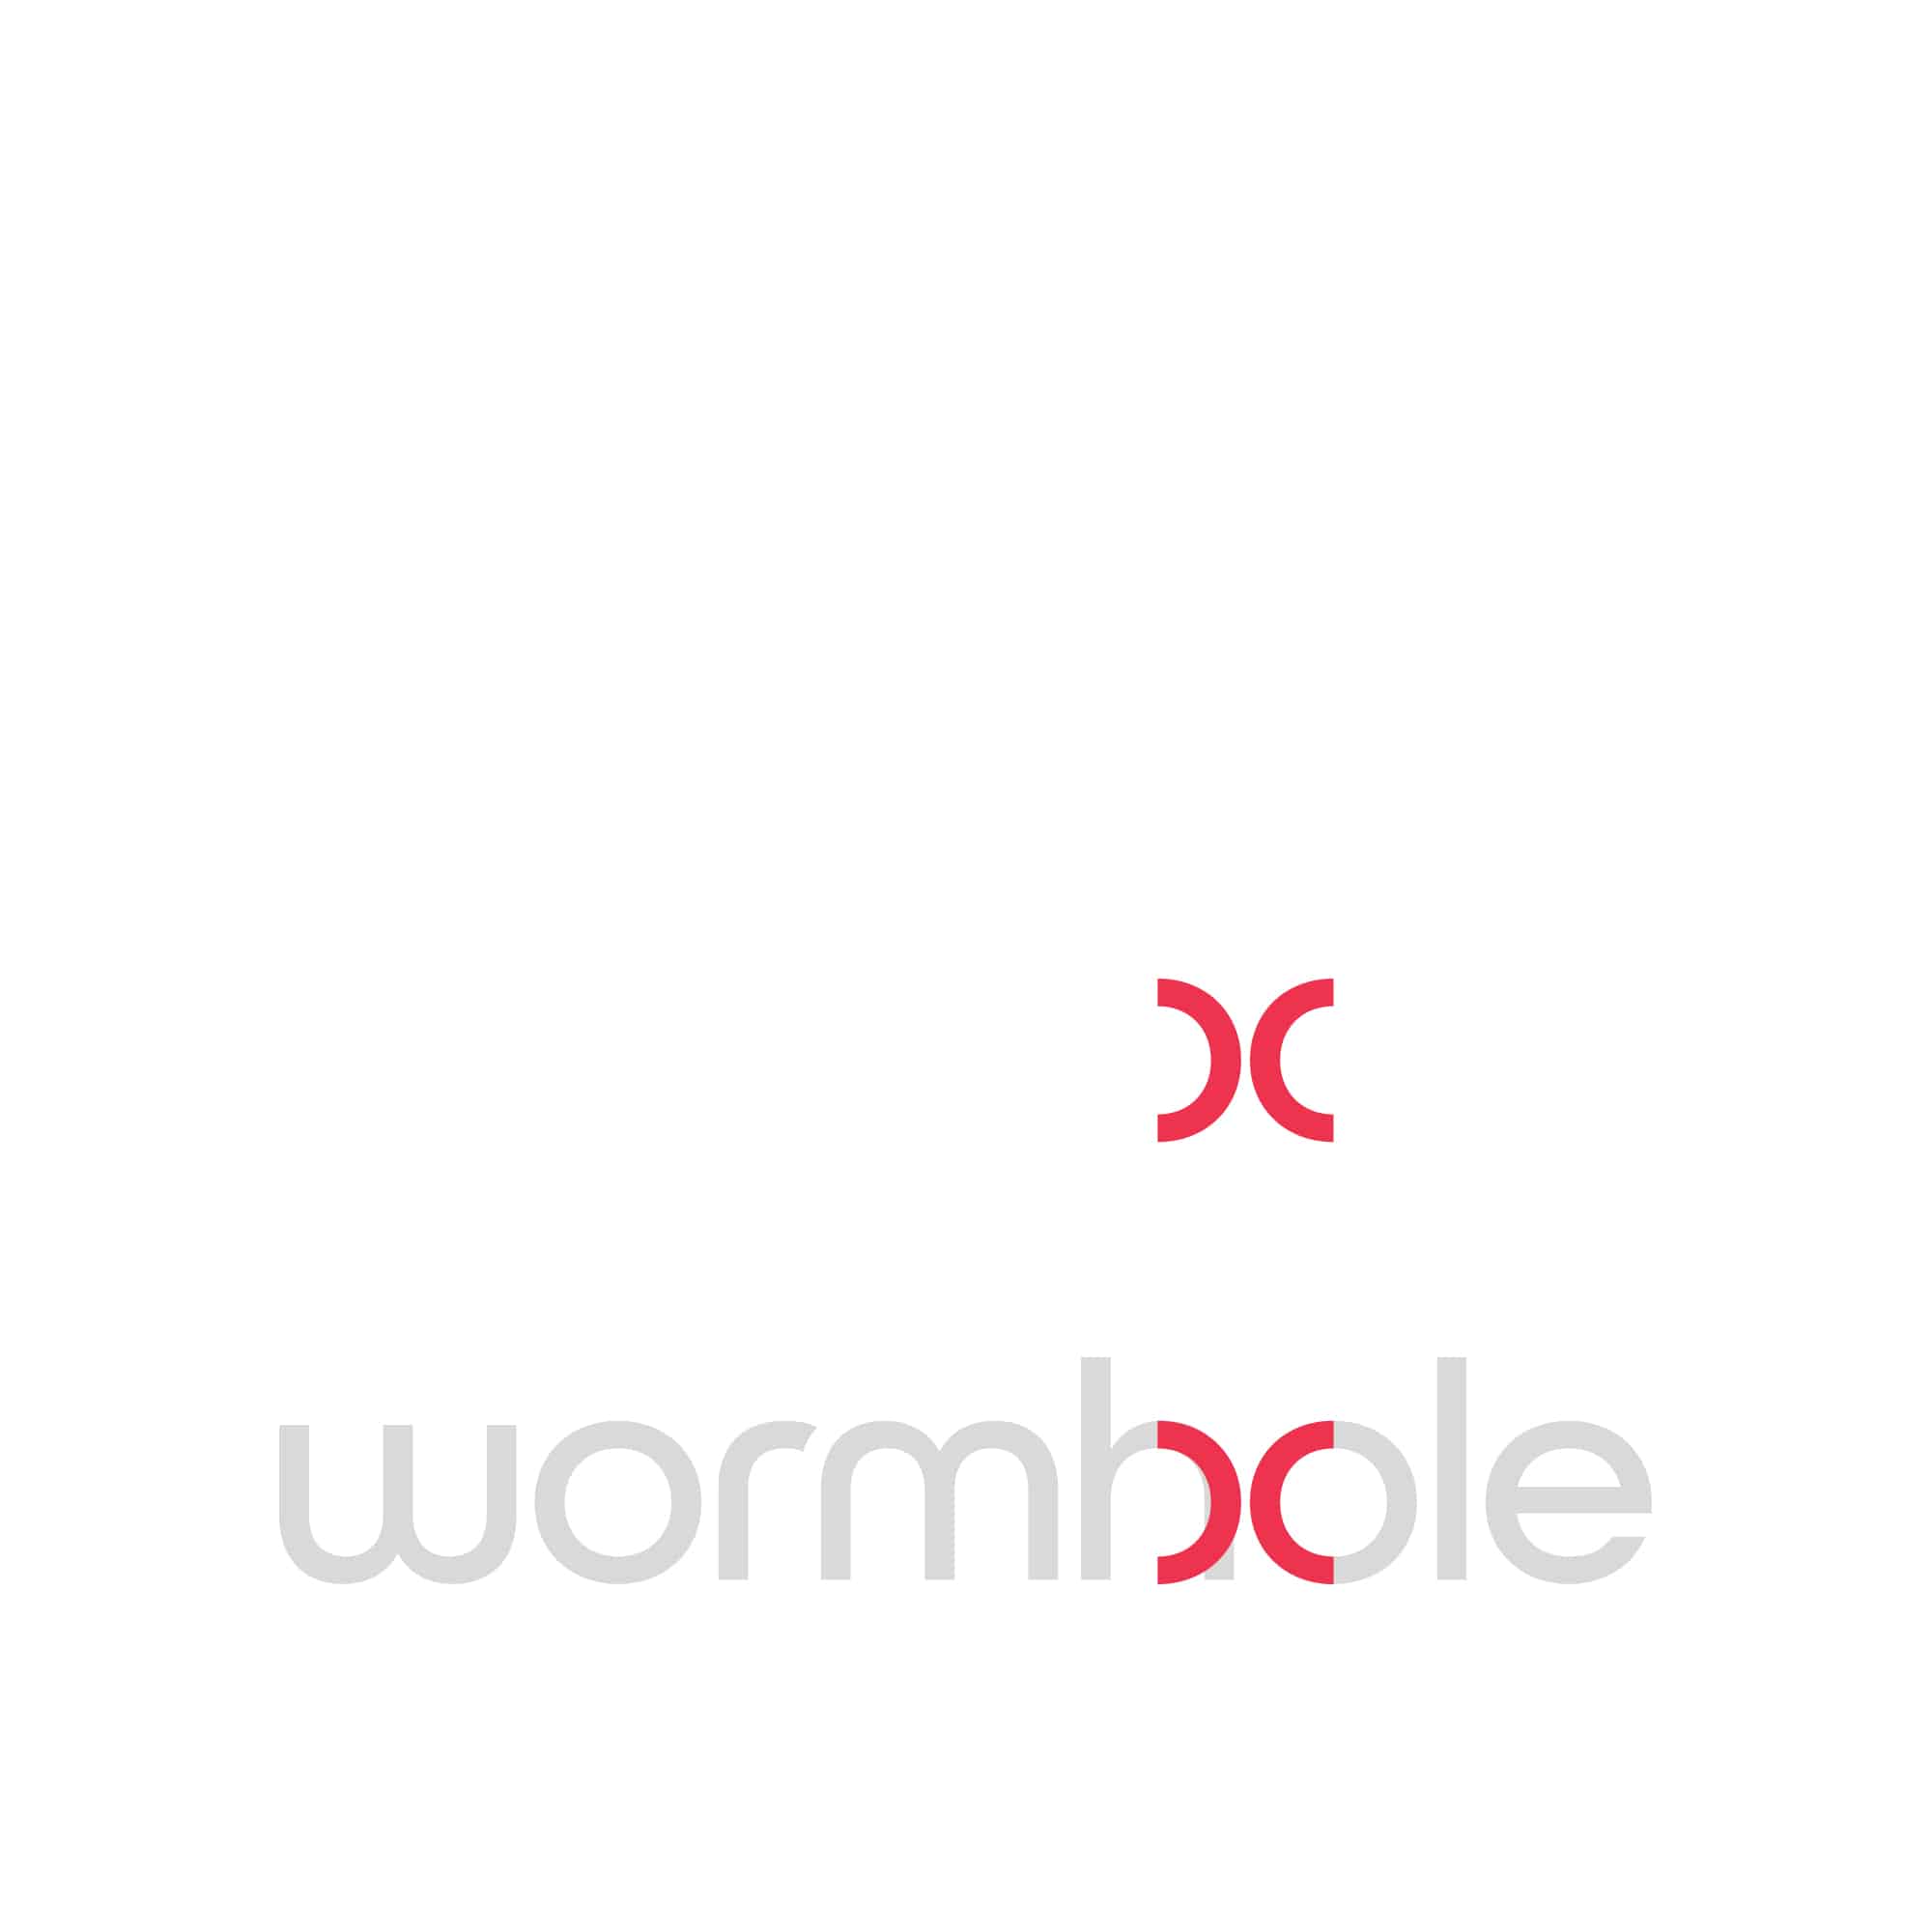 Wormhole Capital Branding + Website design+build